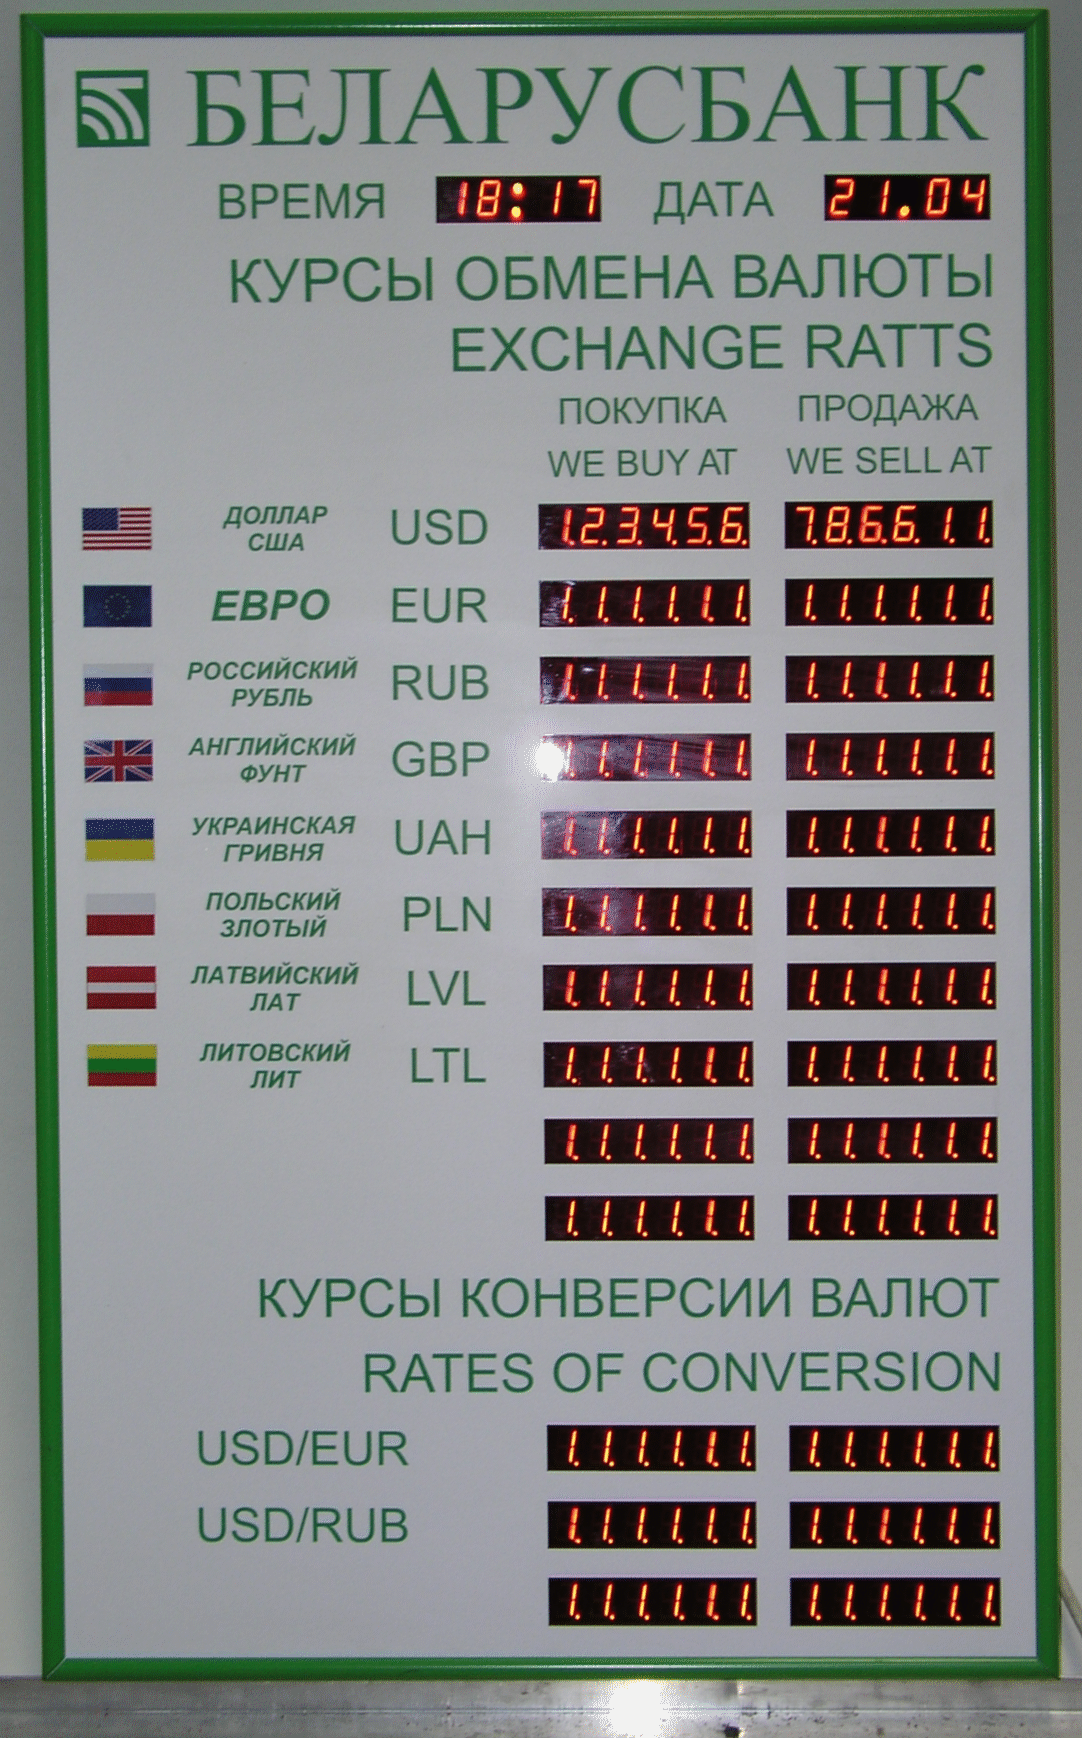 Обмен валют беларусбанка биткоин иностранцев